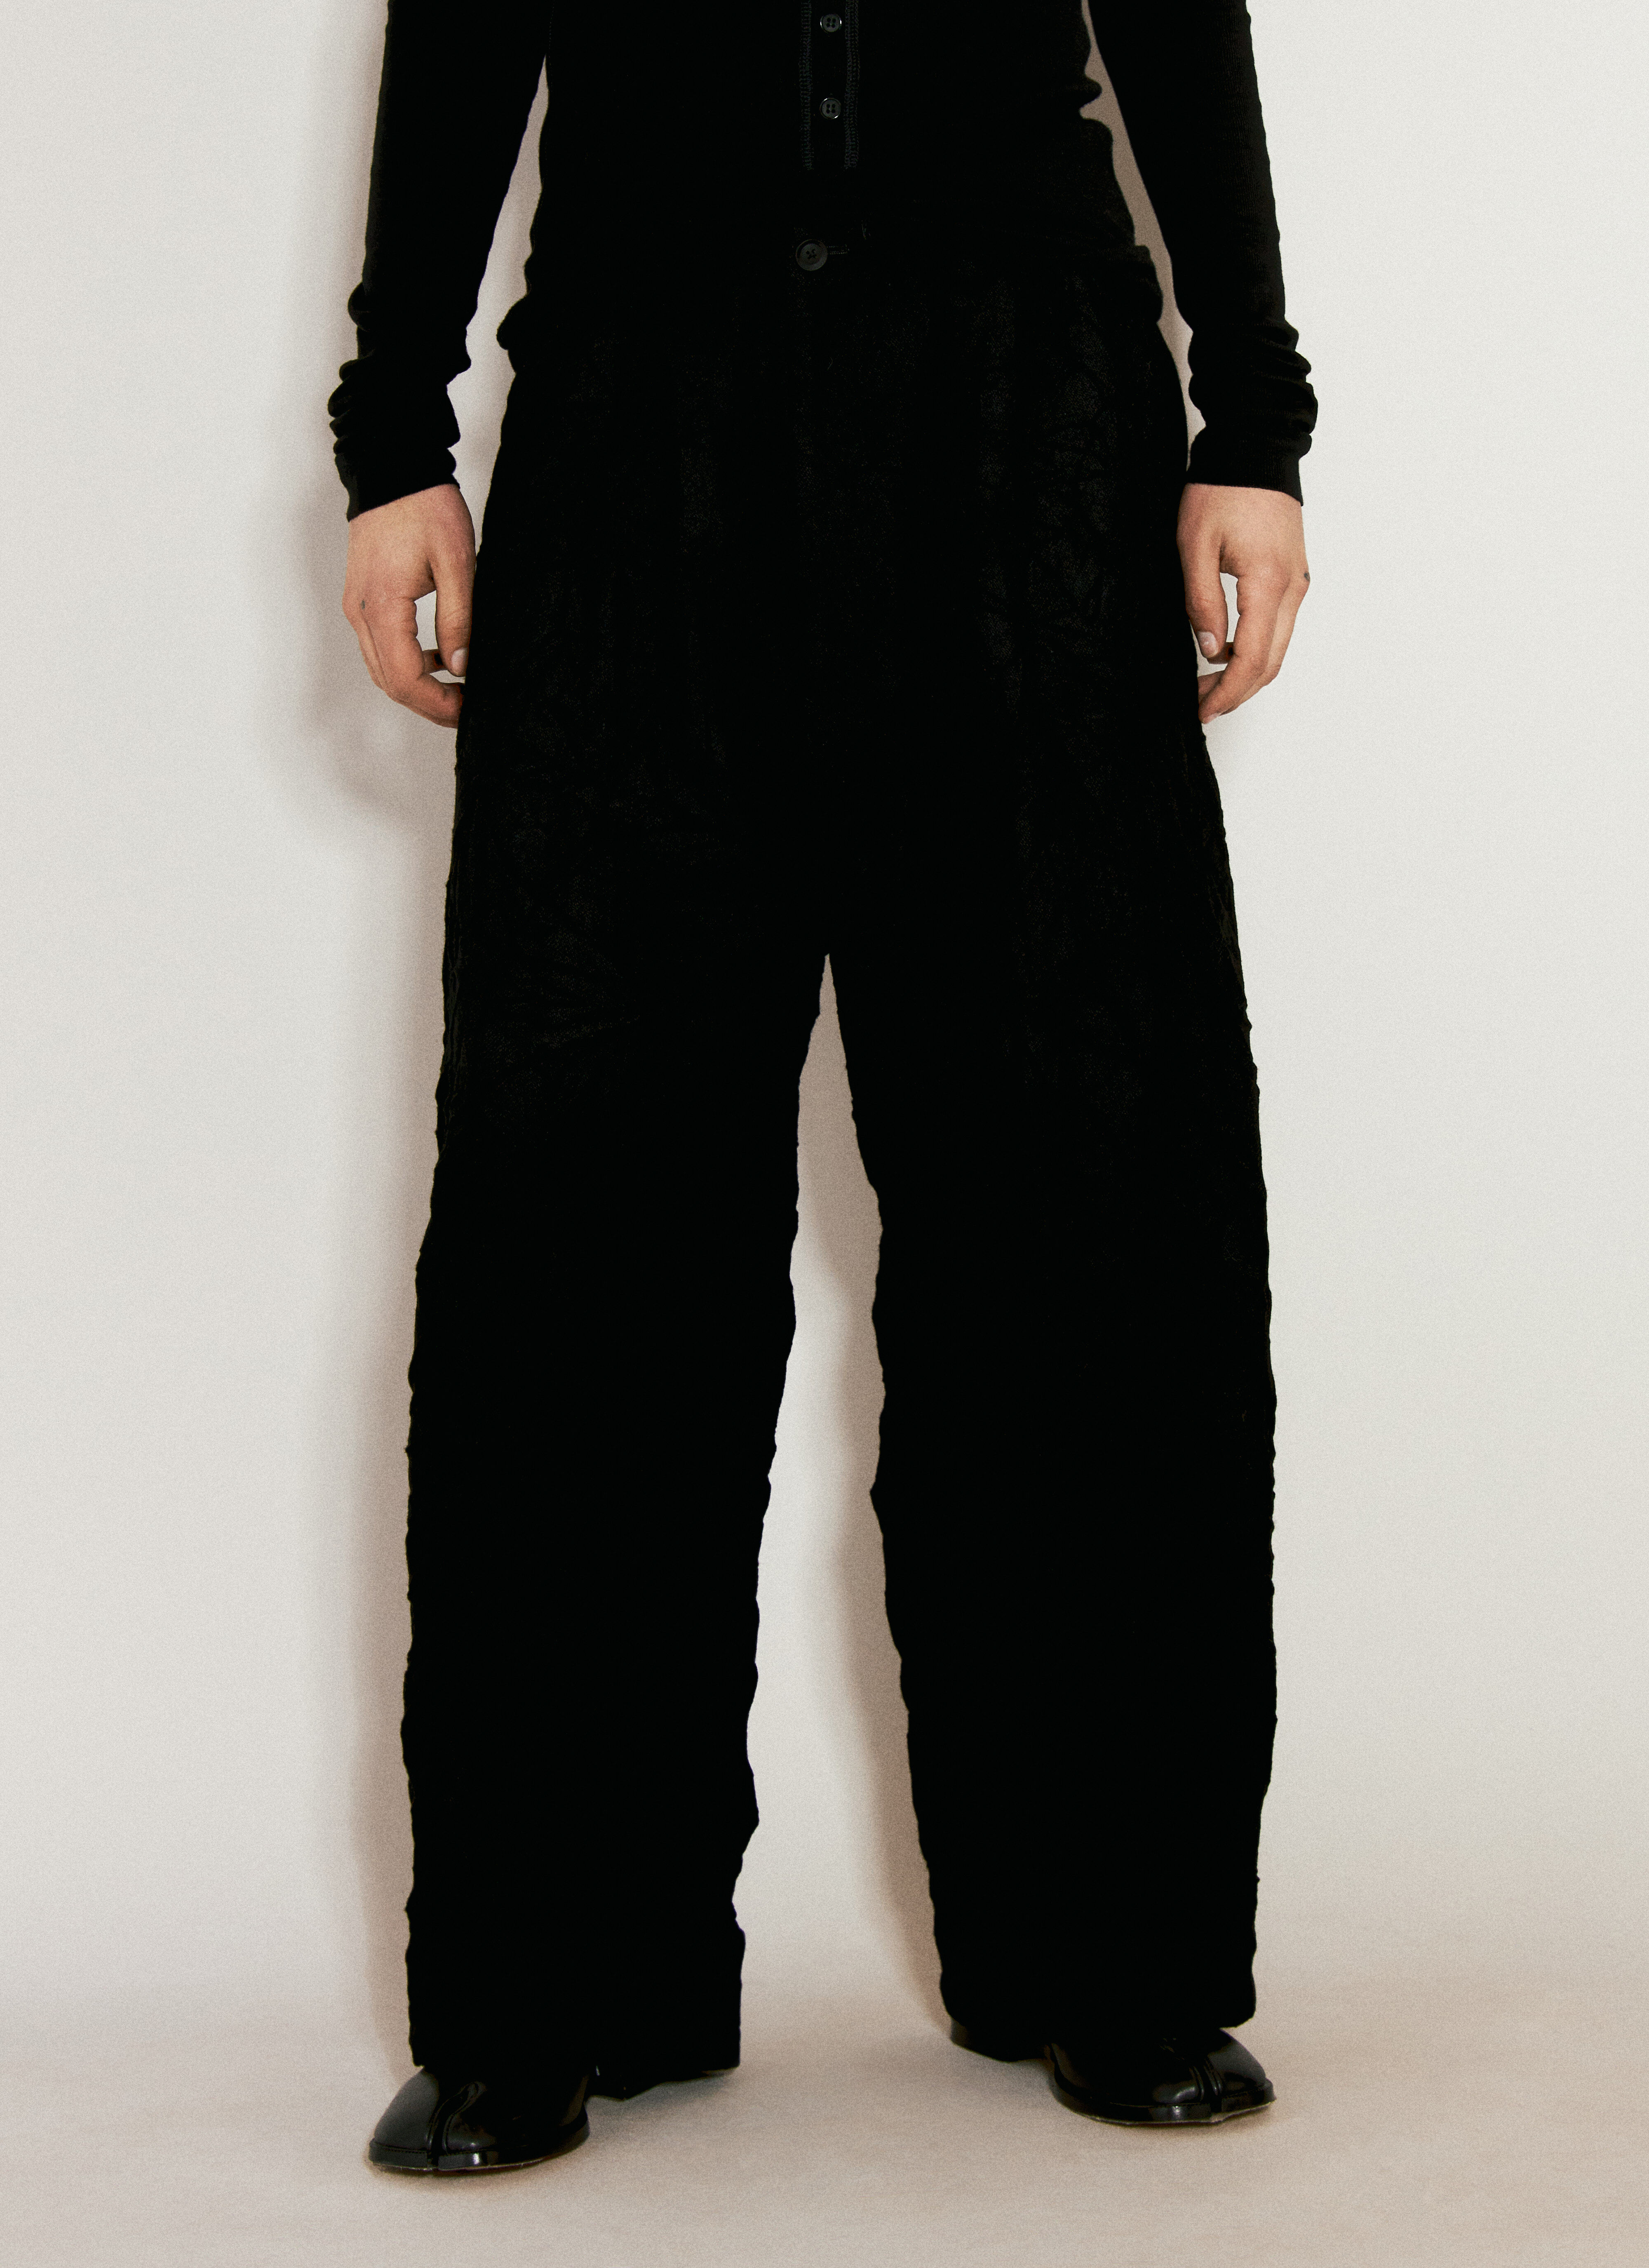 Yohji Yamamoto G-スタンダード ストリングパンツ  ブラック yoy0154015